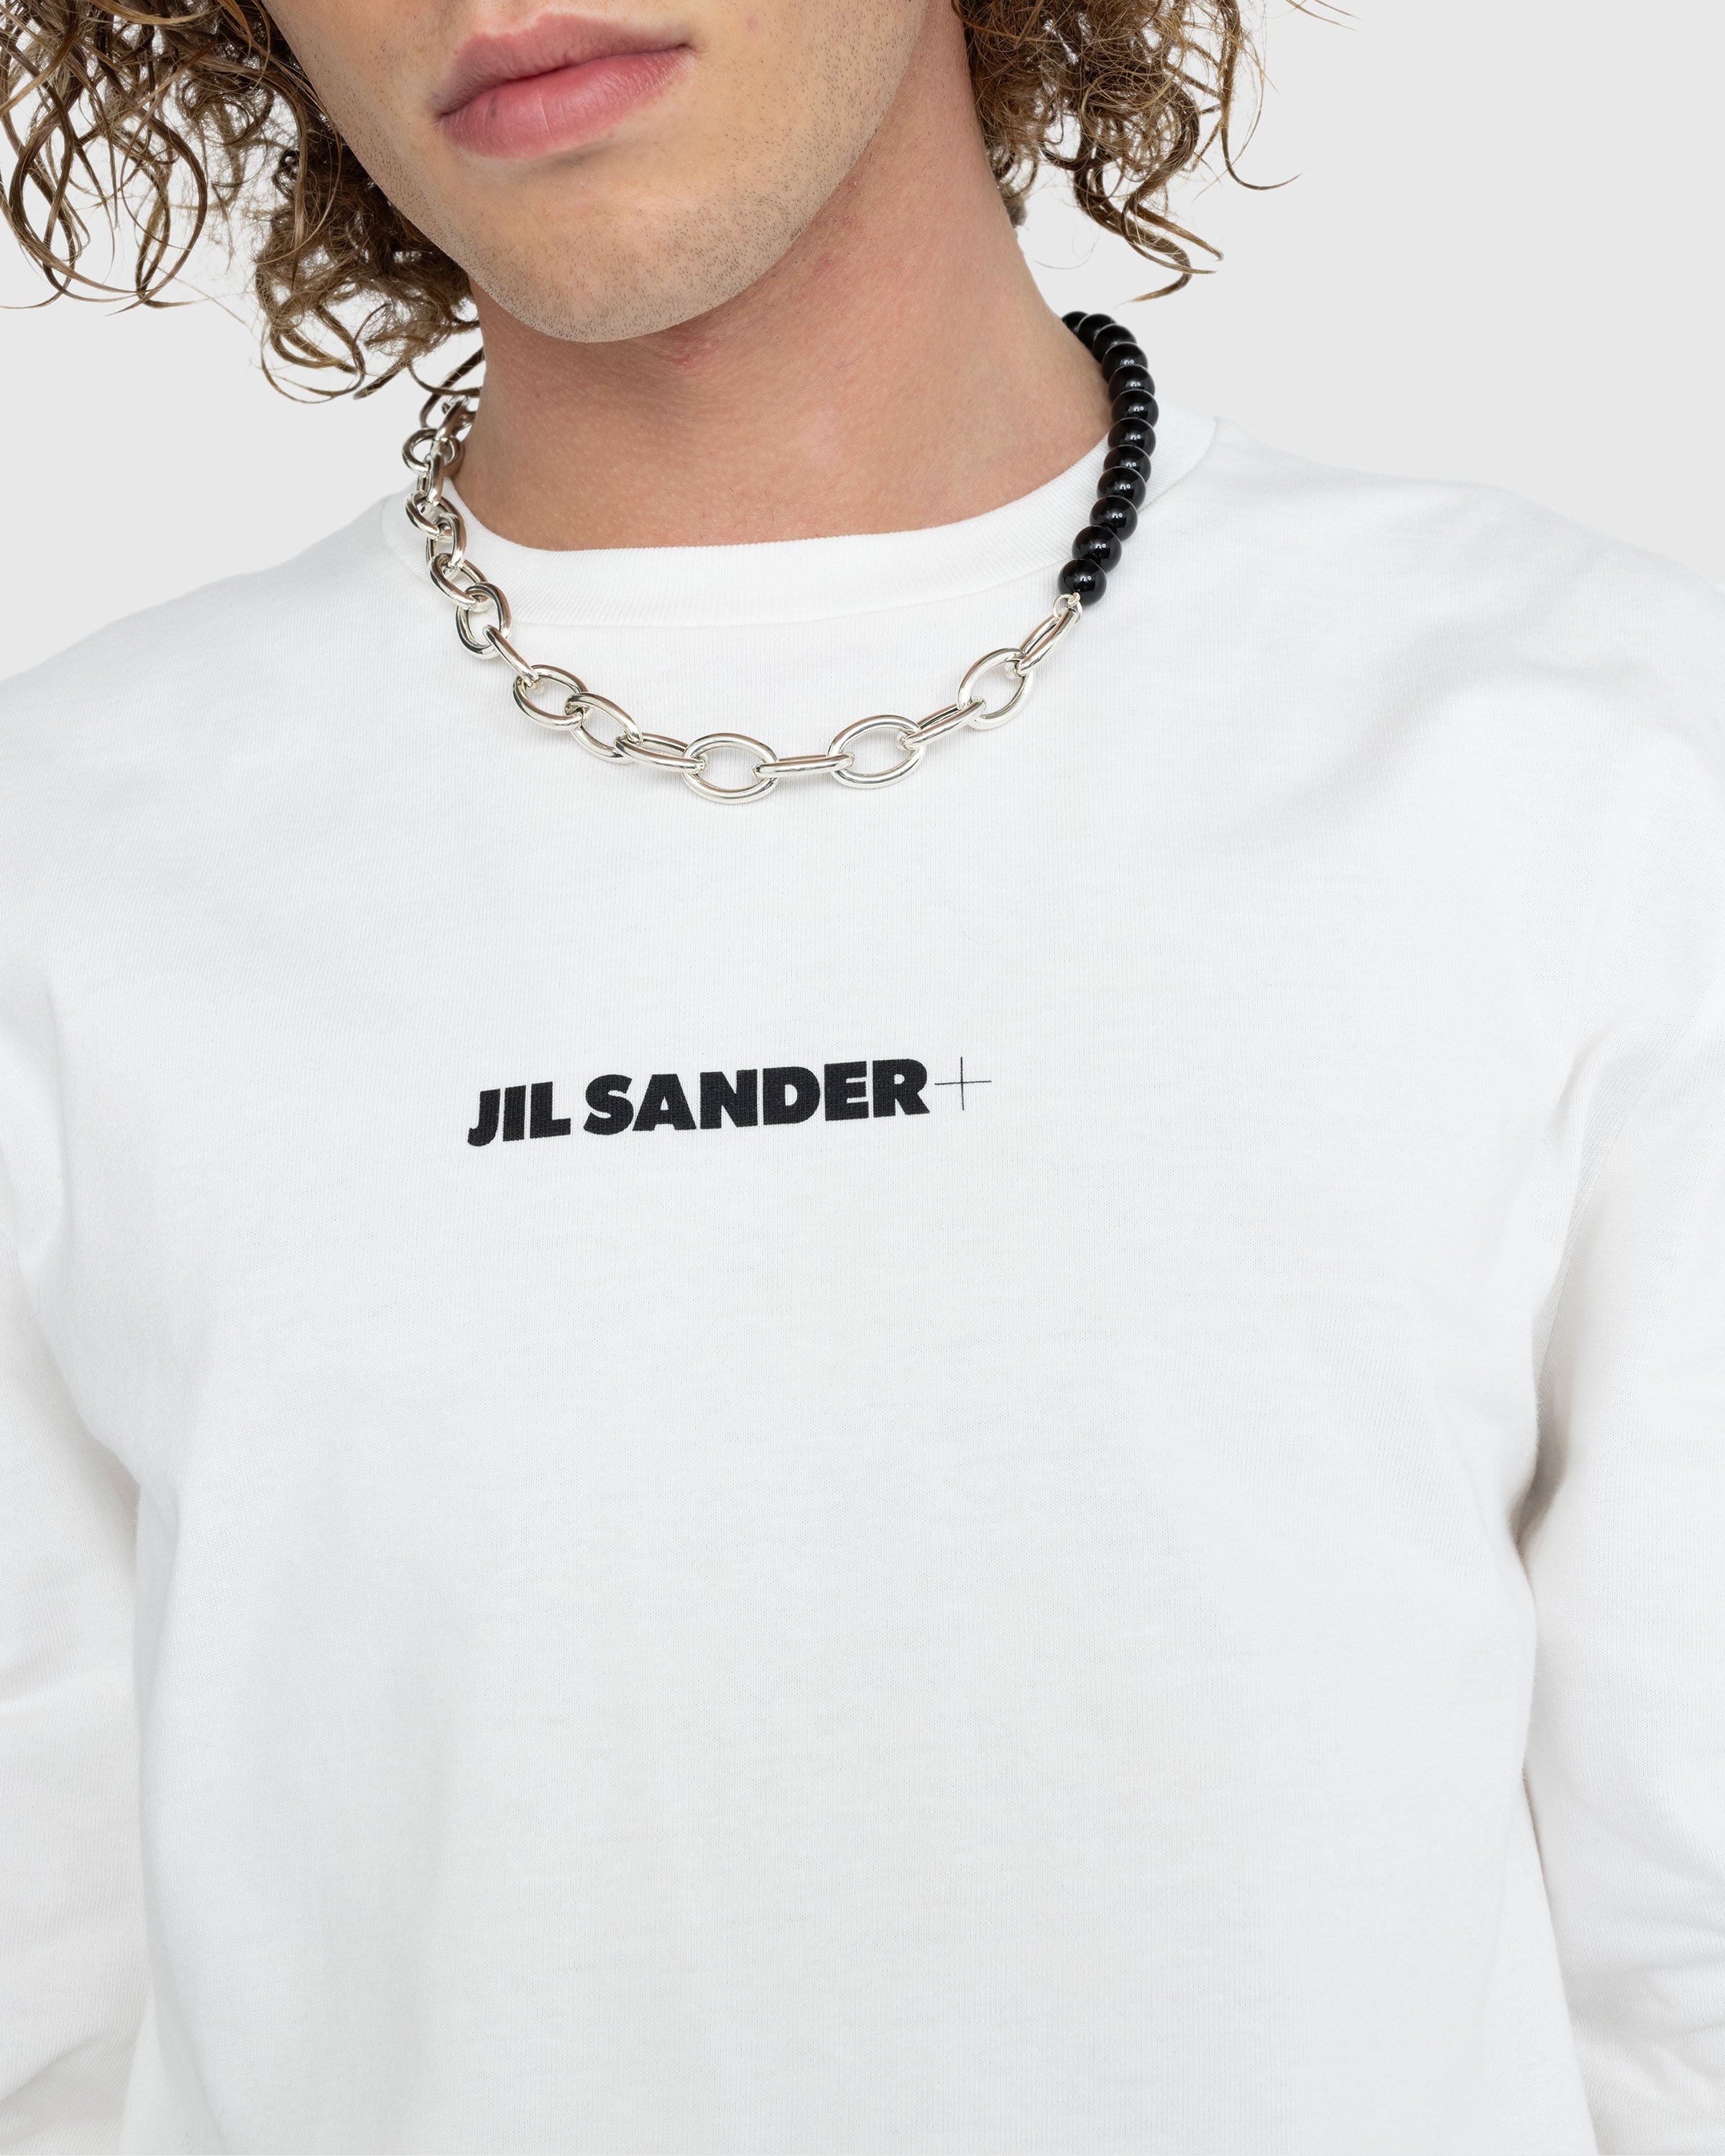 Jil Sander - Solidity Necklace 4 Silver/Black - Accessories - Multi - Image 4